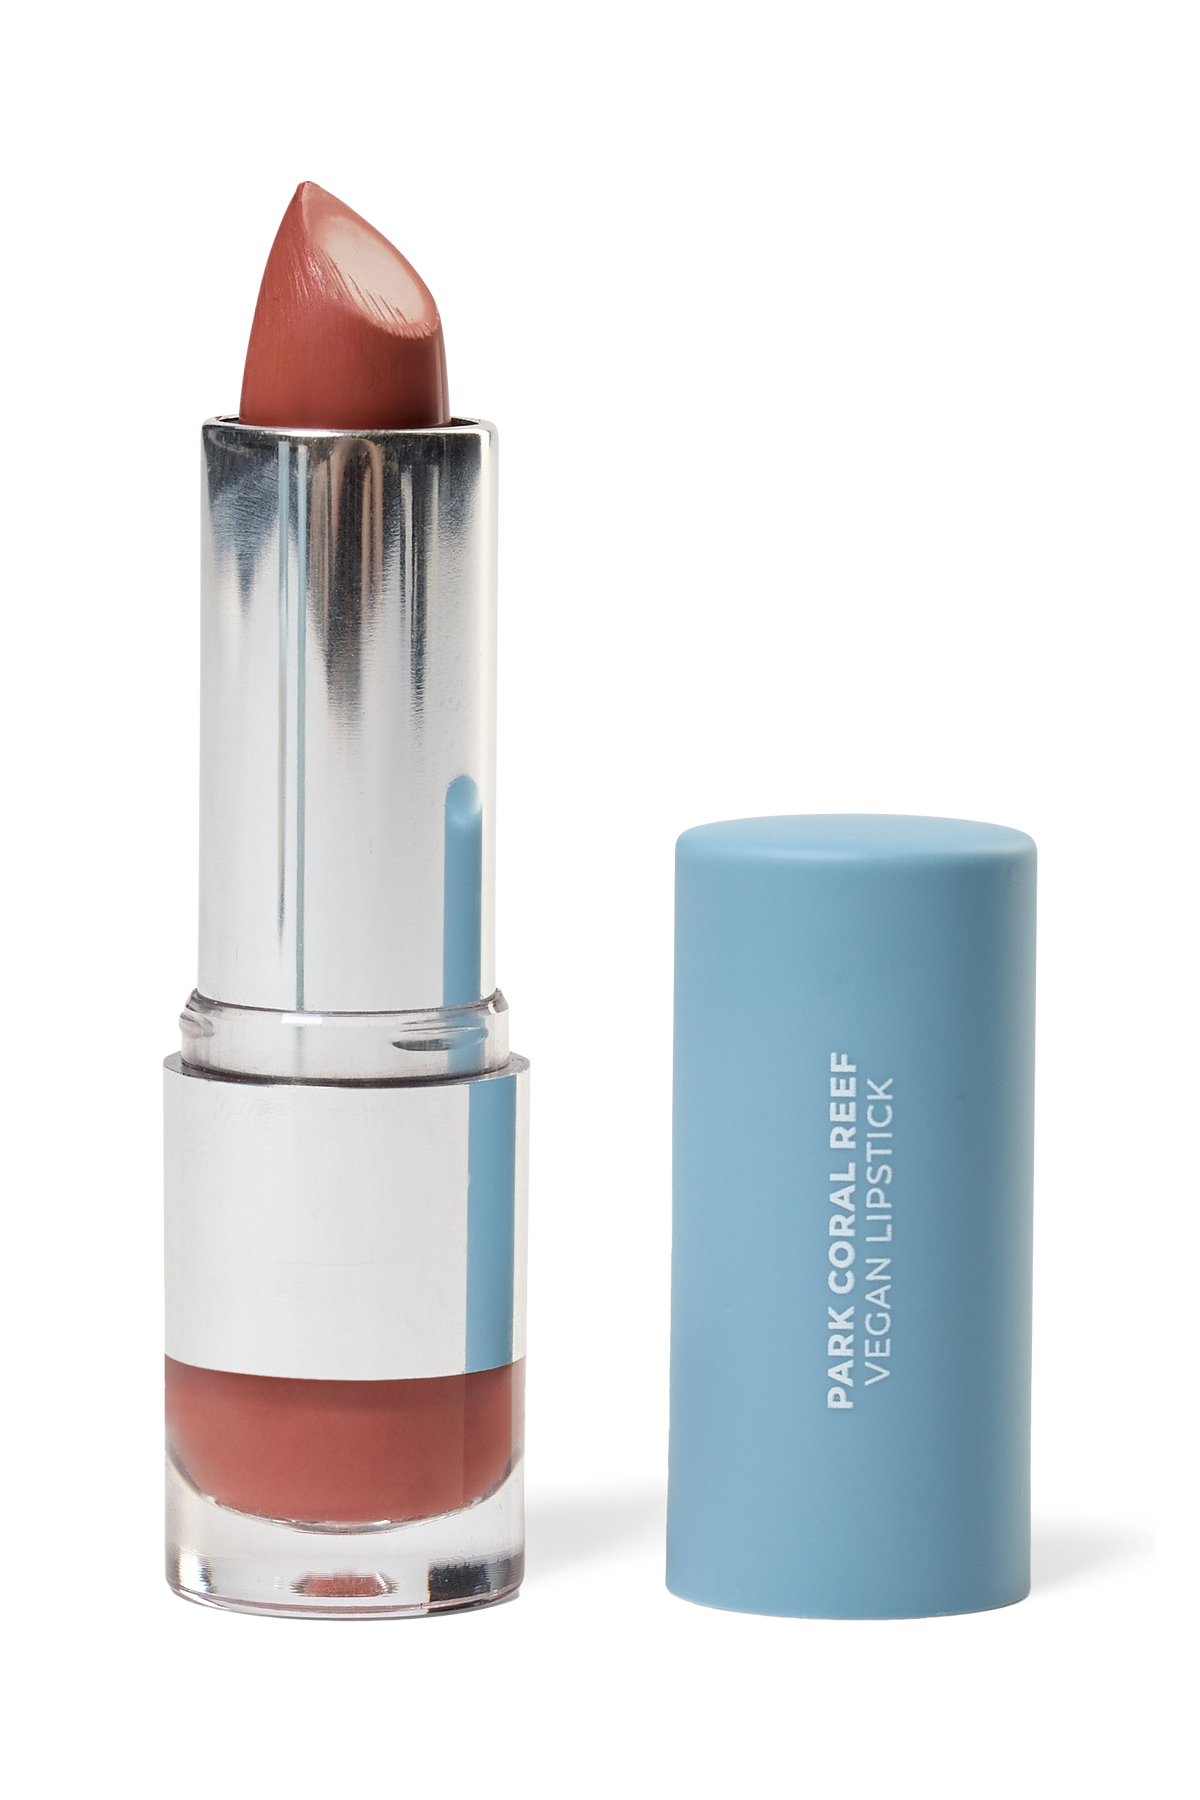 Coral reef vegan lipstick - Snapper